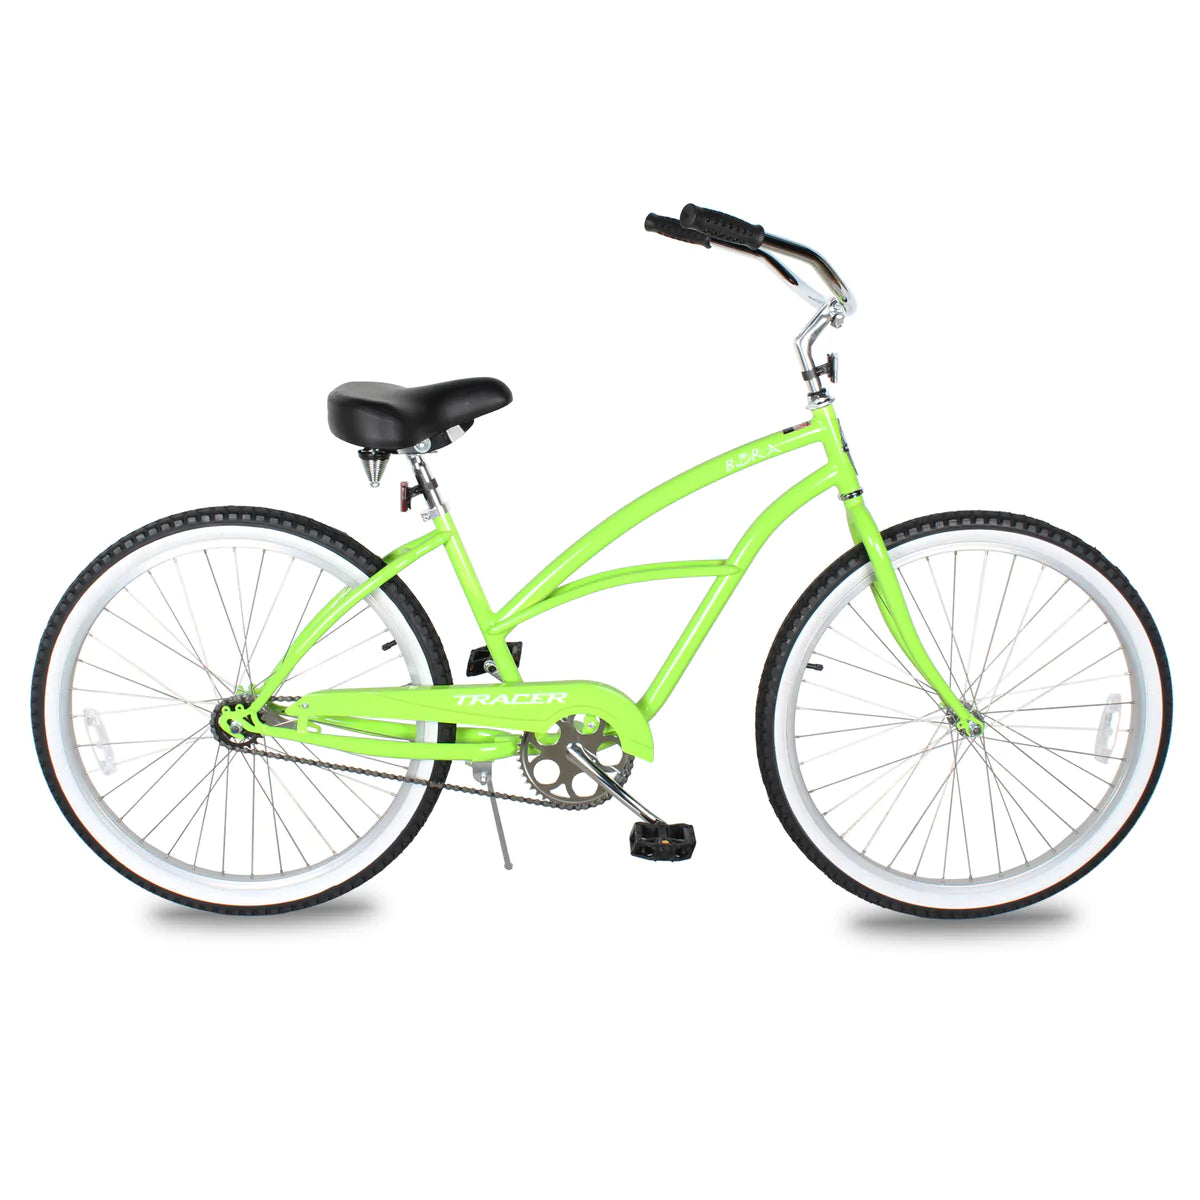 Tracer Bora 26" Beach Cruiser Bike For Women - Mint Green | Beach Cruiser Bikes | Cruiser Bikes | Beach Bikes | Single Speed | Single Speed Cycle | Adult Bike | Bike Lover USA